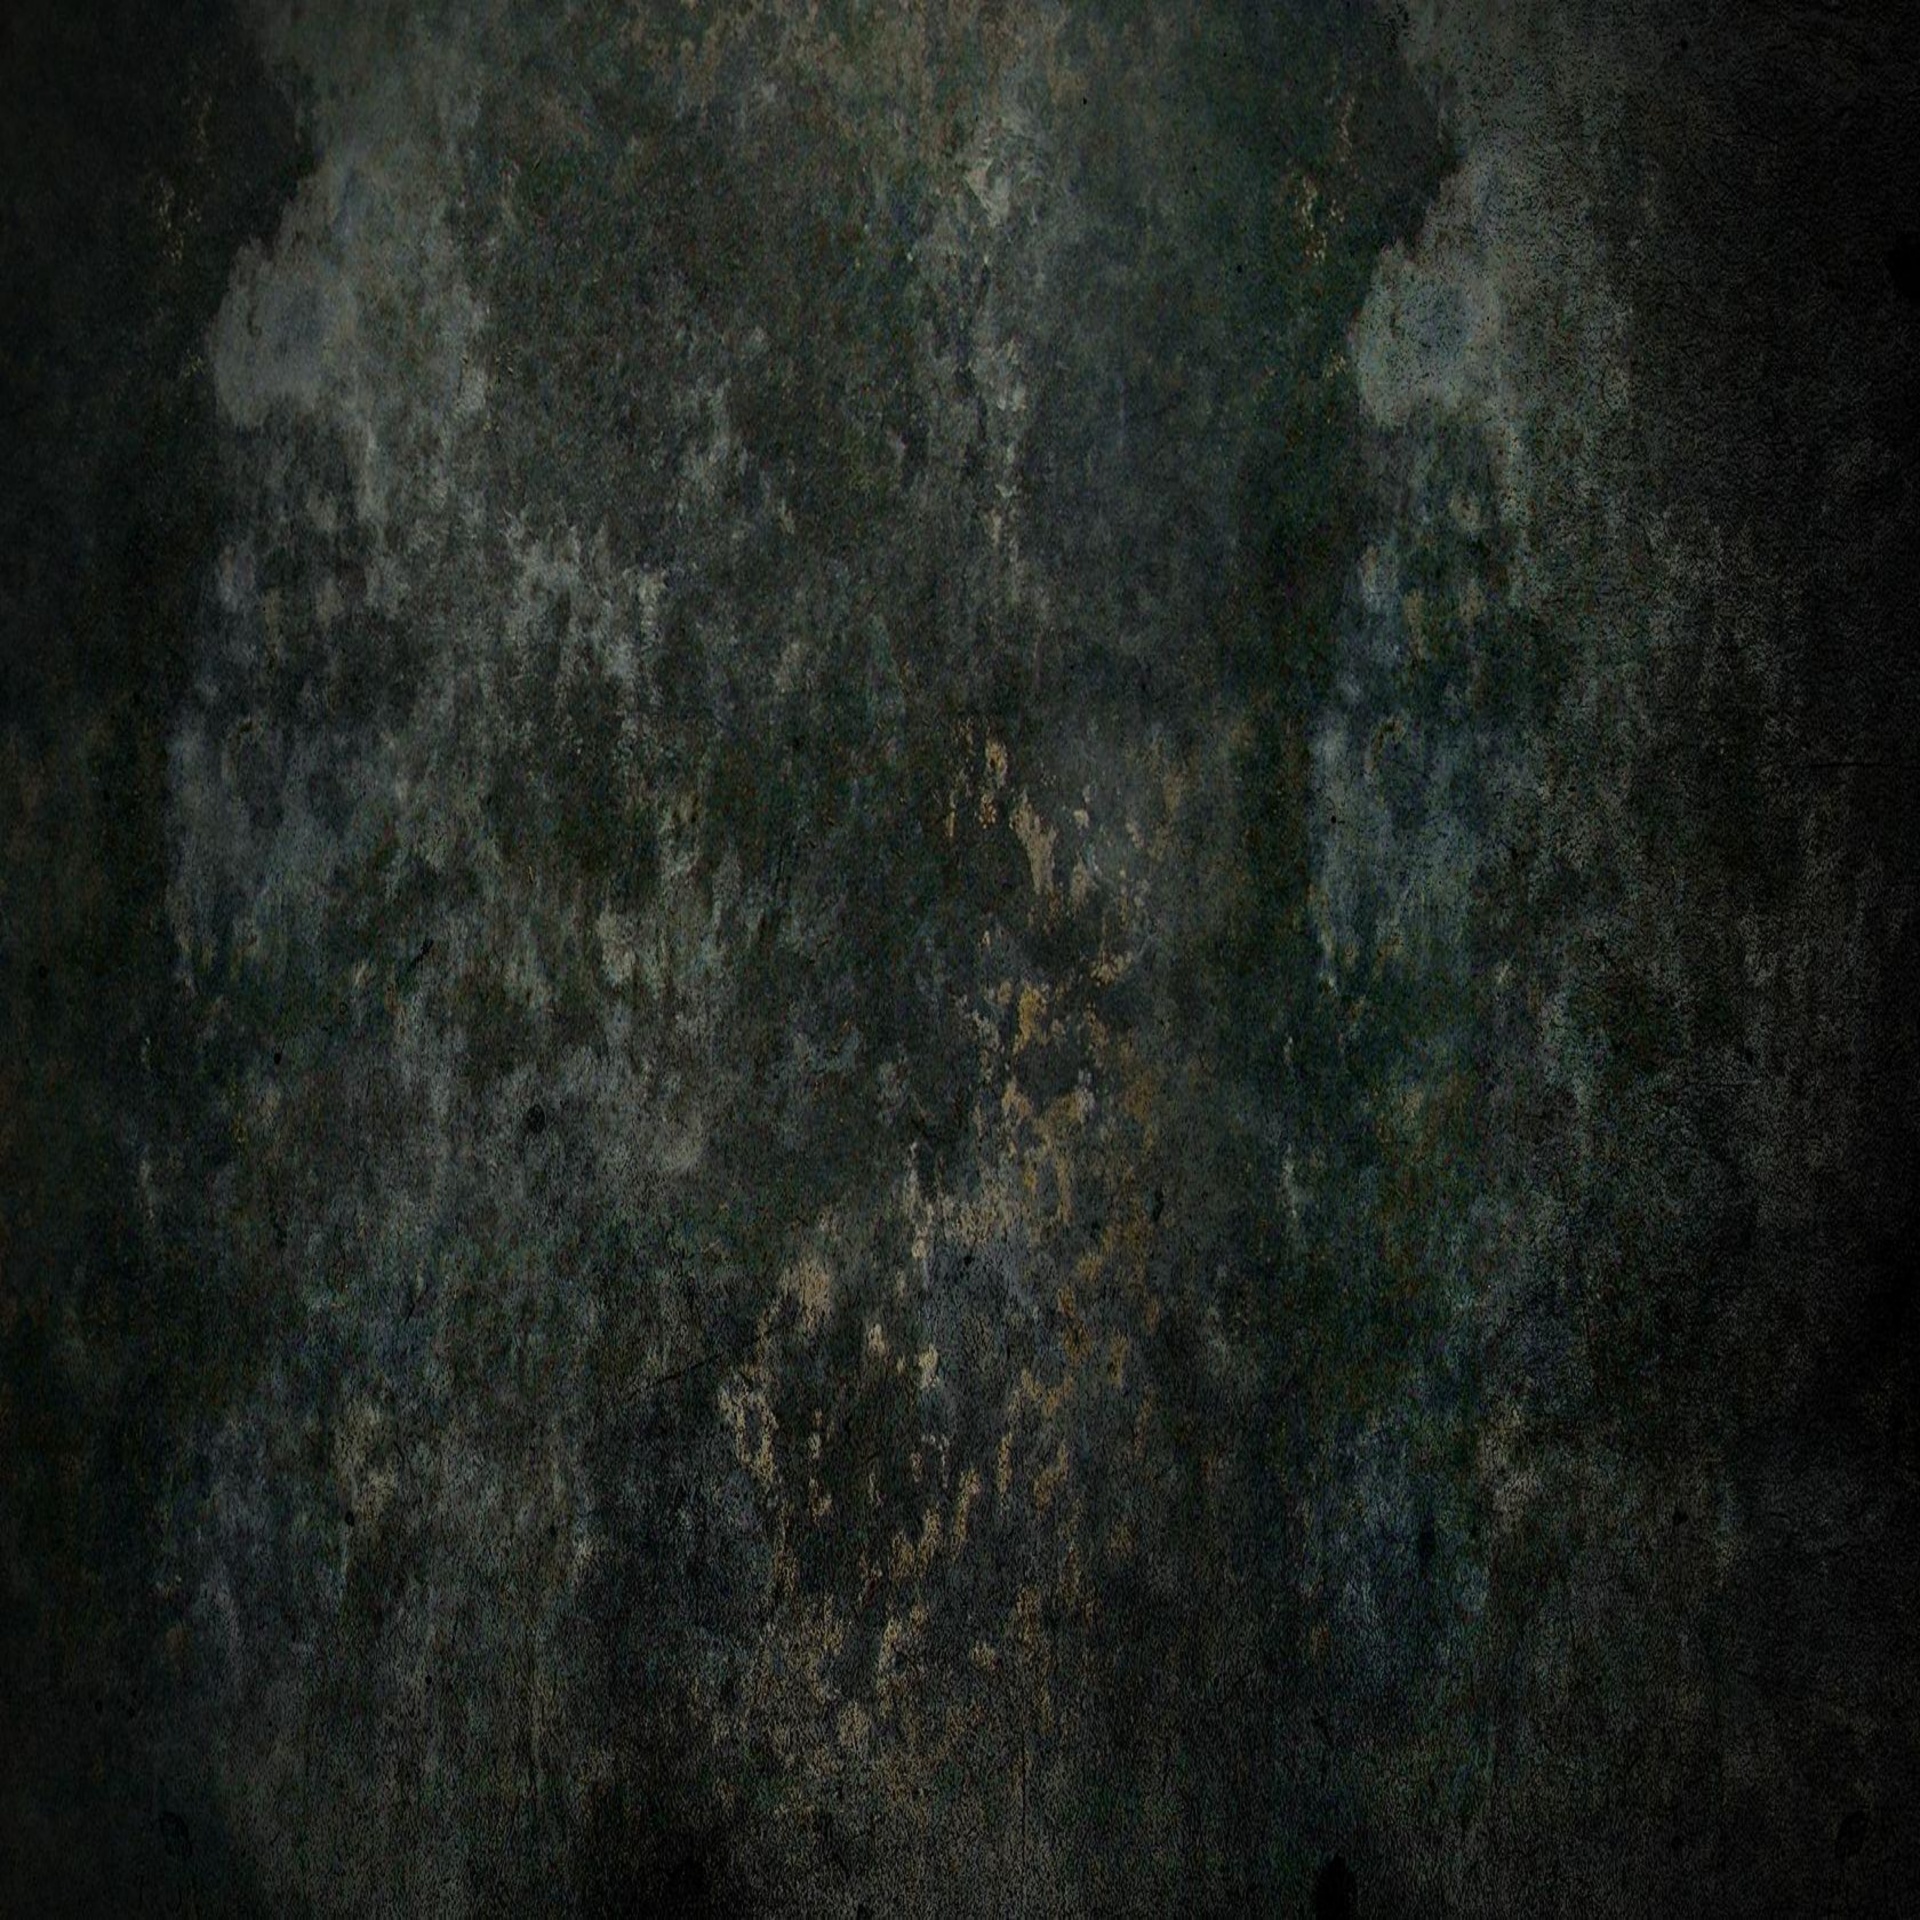 Grunge background with a black texture - Grunge